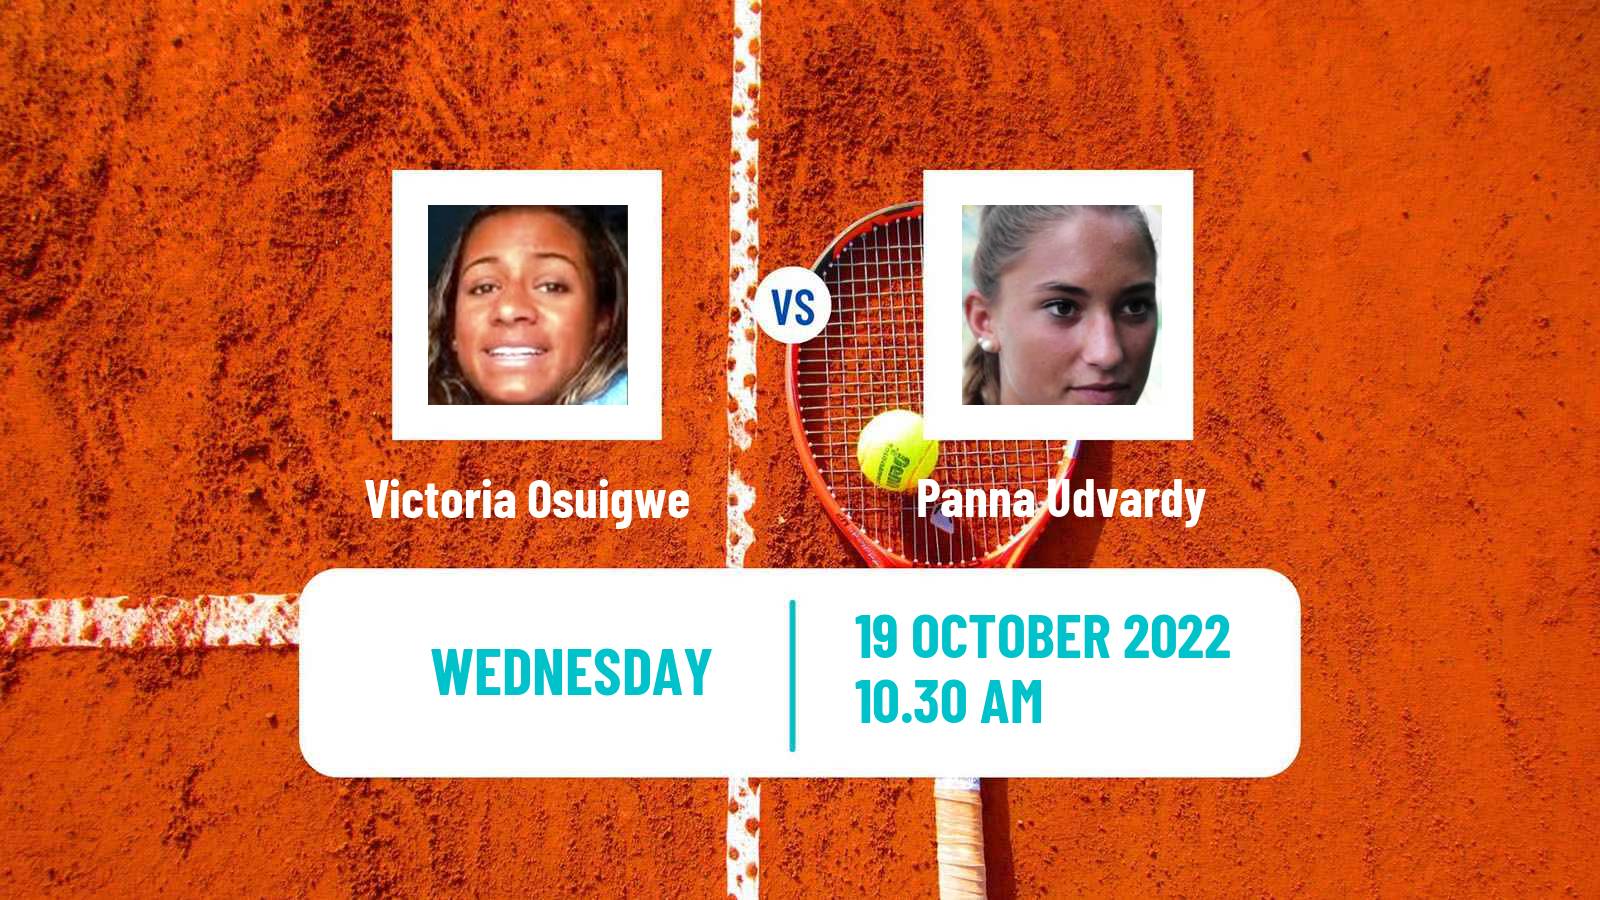 Tennis ITF Tournaments Victoria Osuigwe - Panna Udvardy